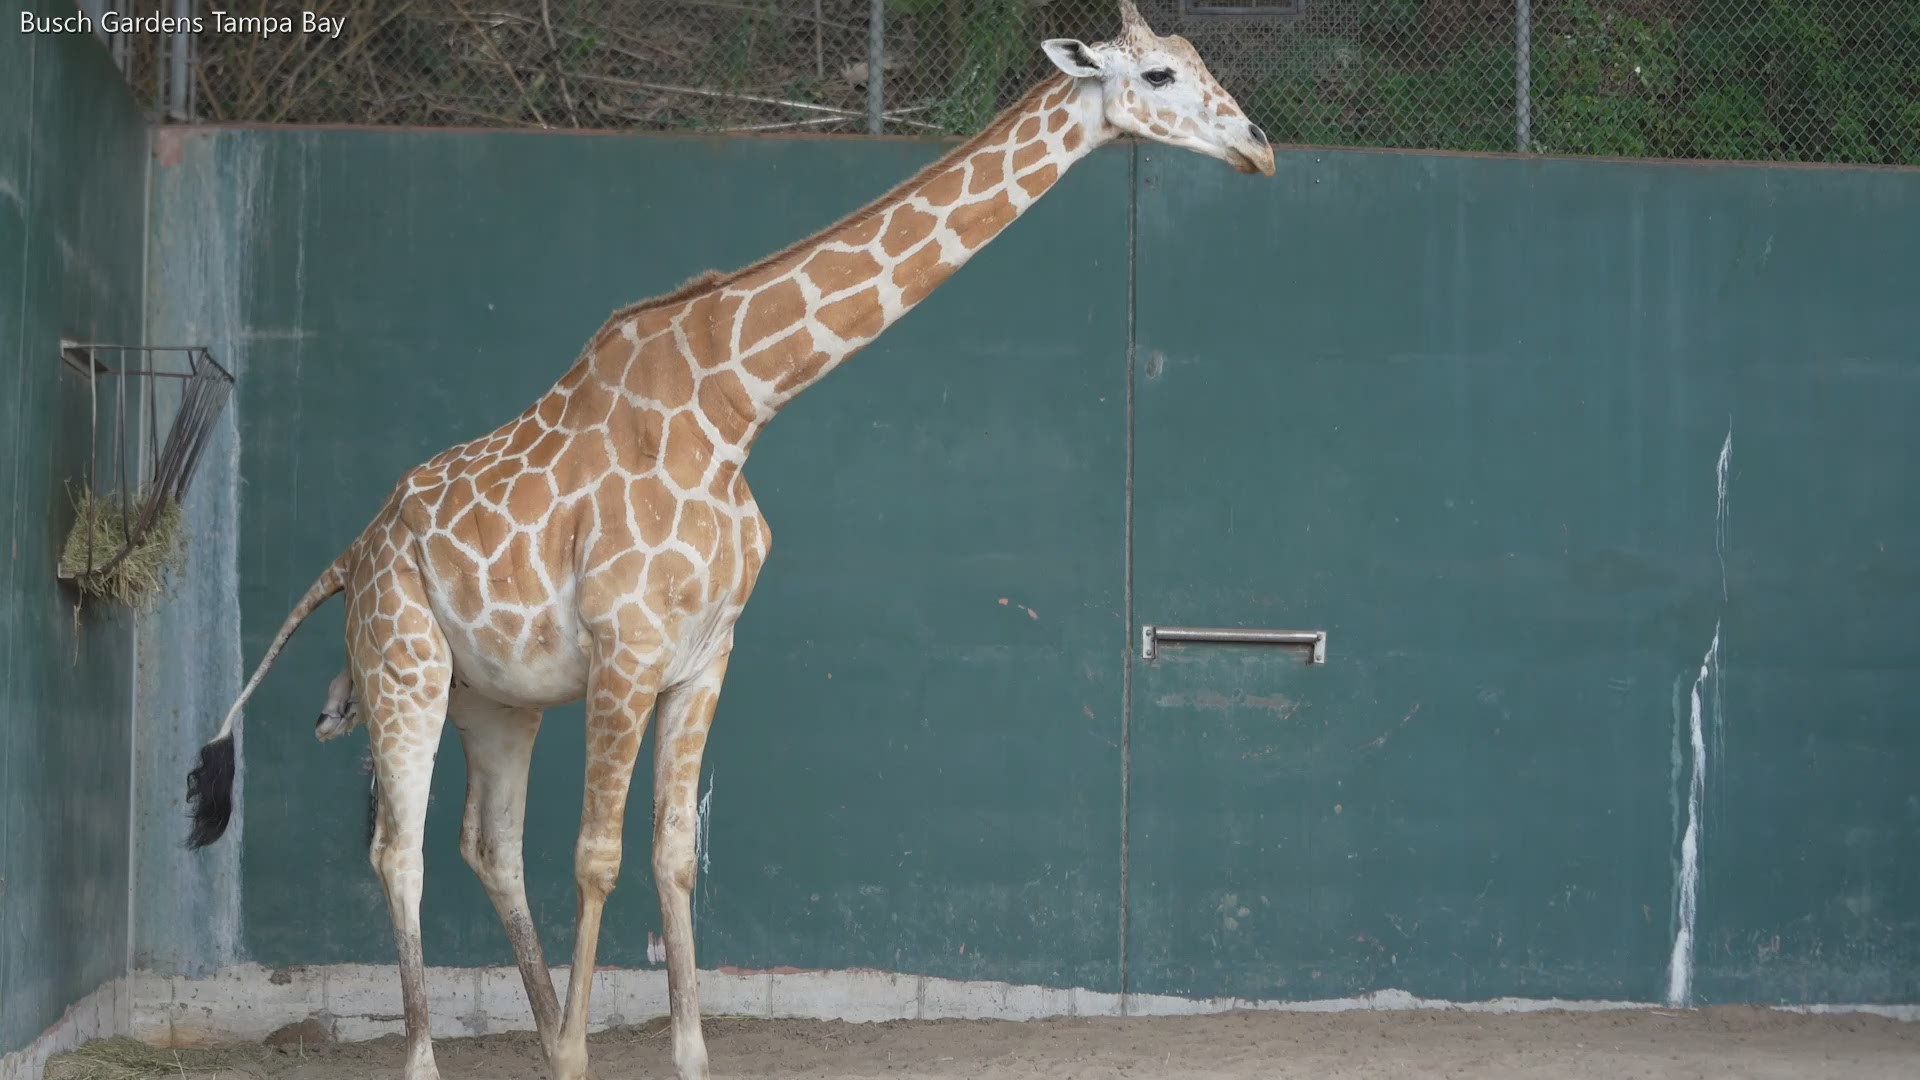 A new baby giraffe was born Friday at Busch Gardens Tampa Bay.